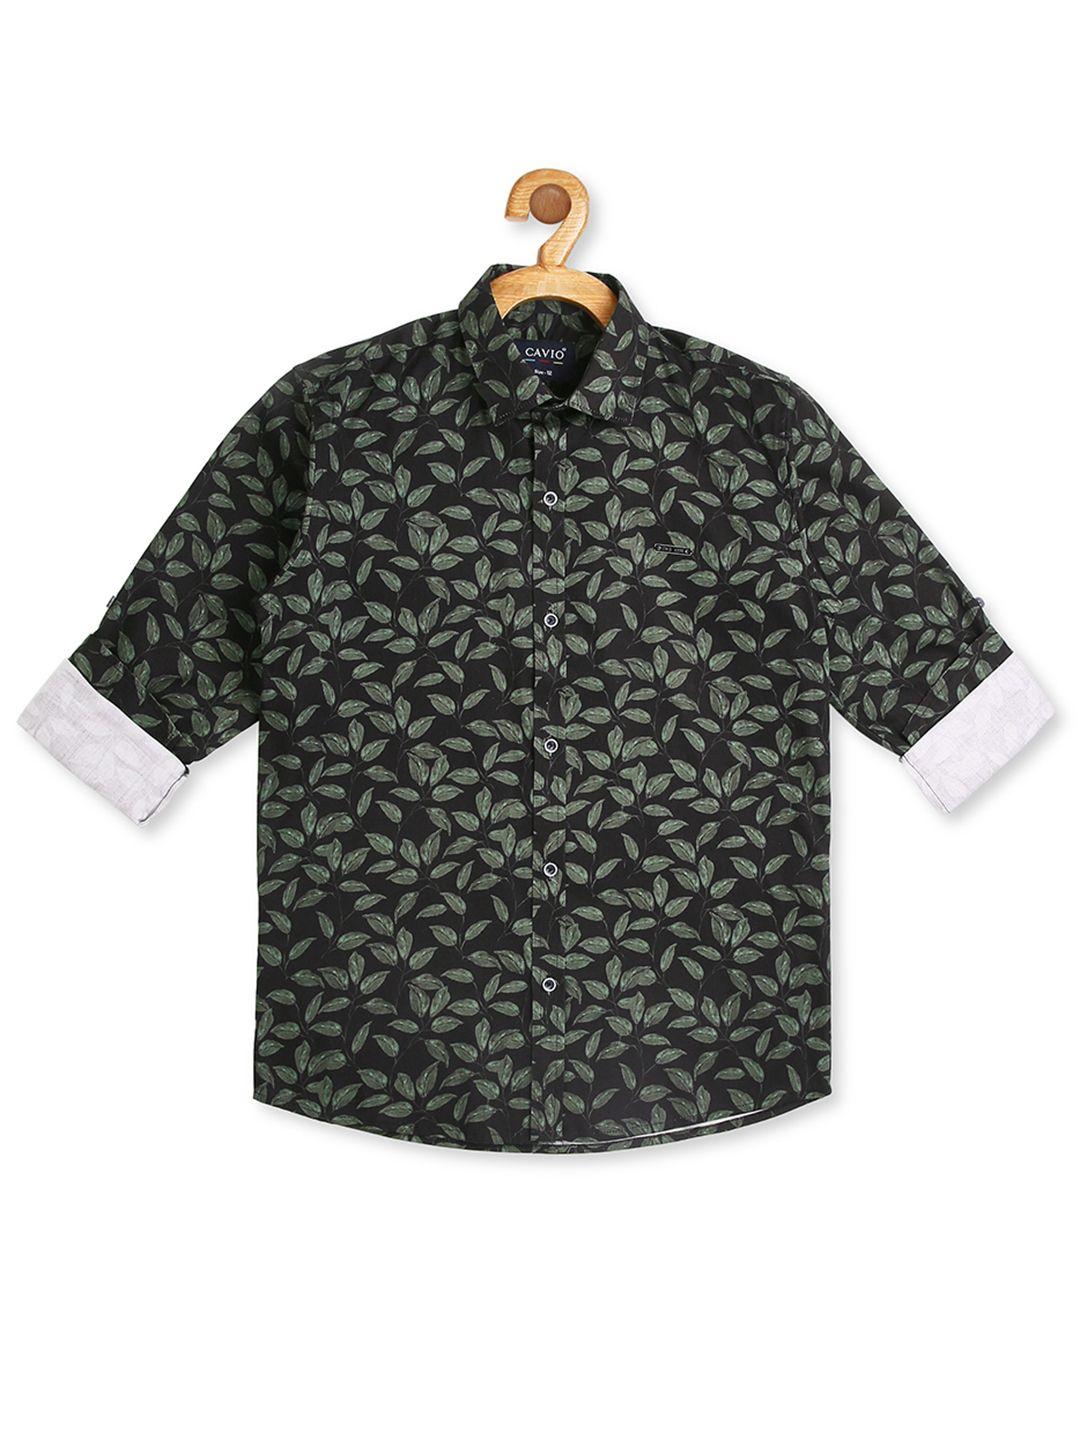 cavio boys green floral printed casual shirt